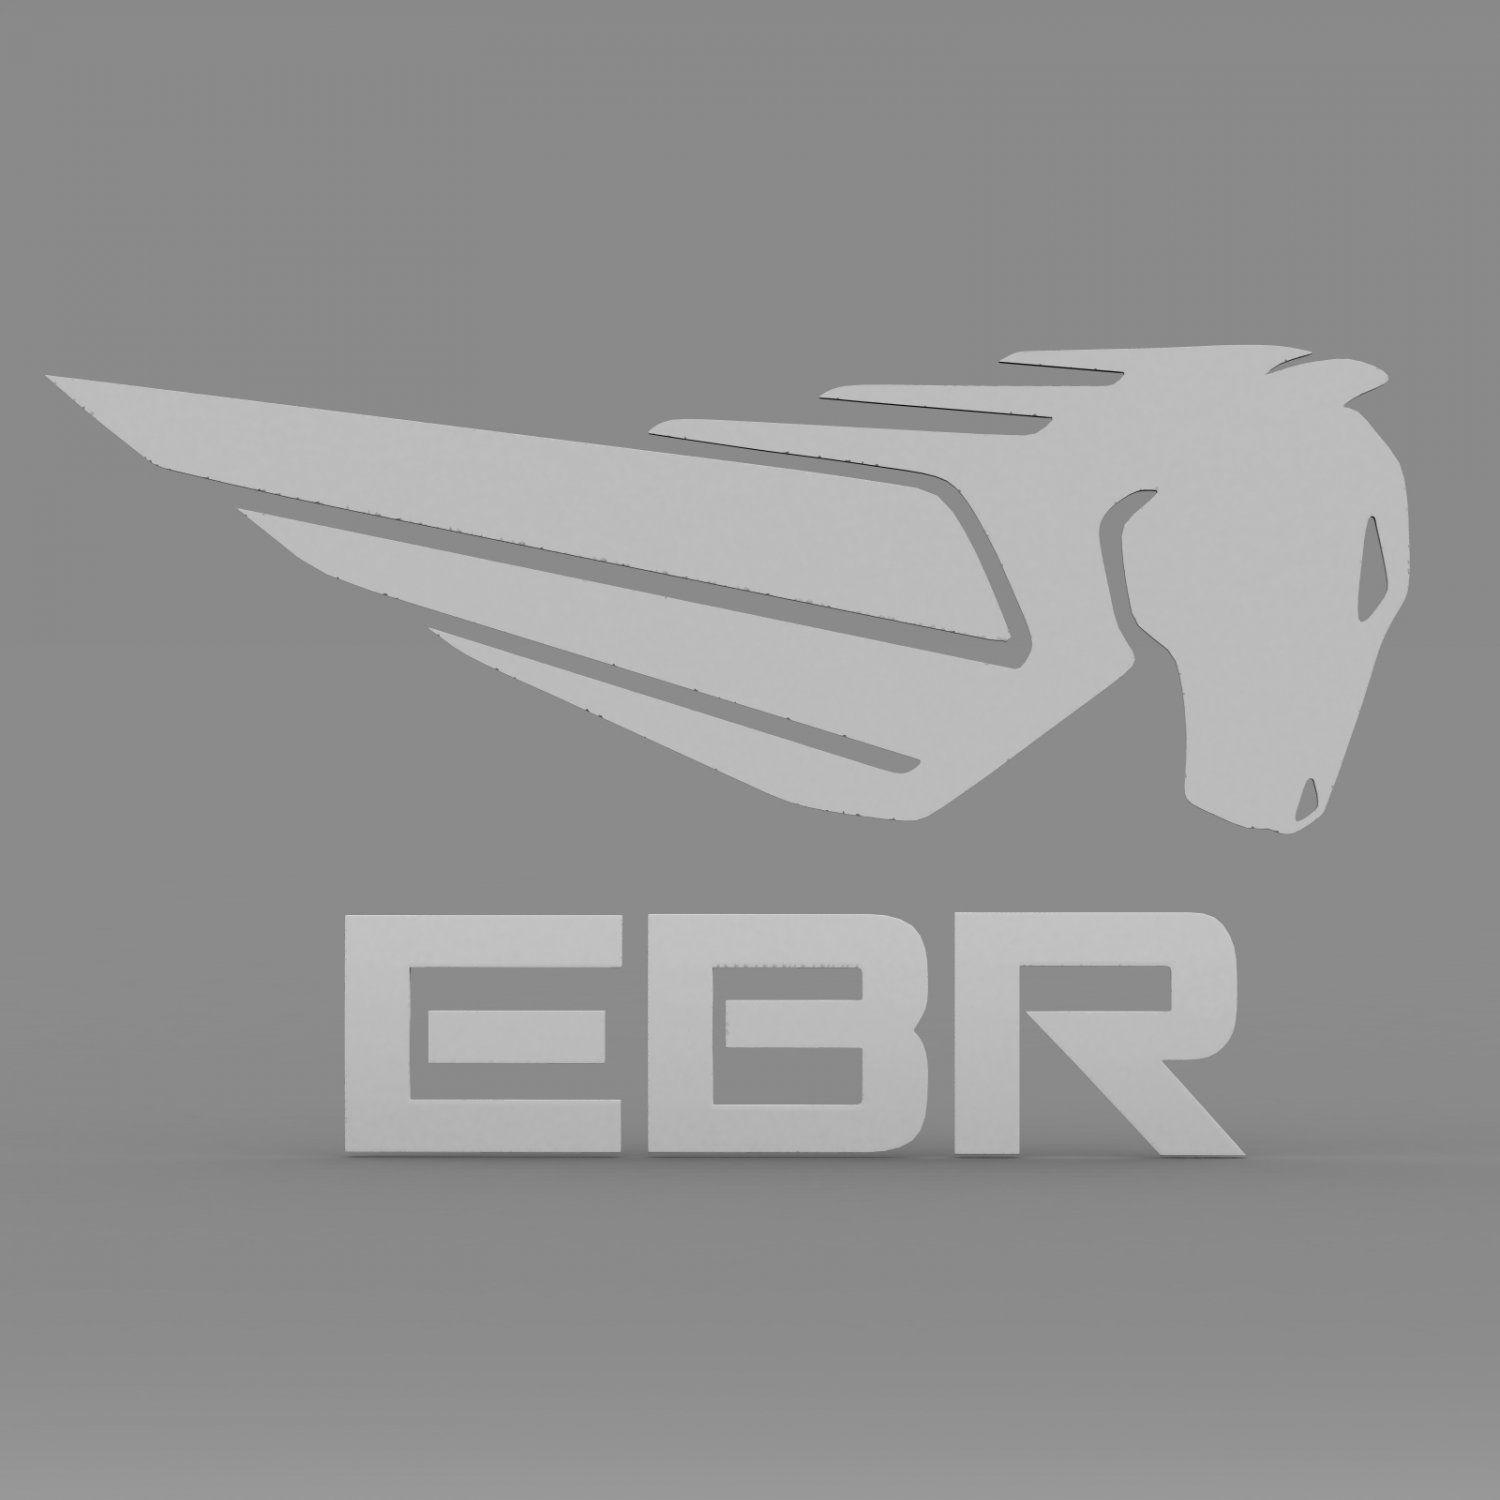 EBR Logo - Ebr logo 3D Model in Parts of auto 3DExport